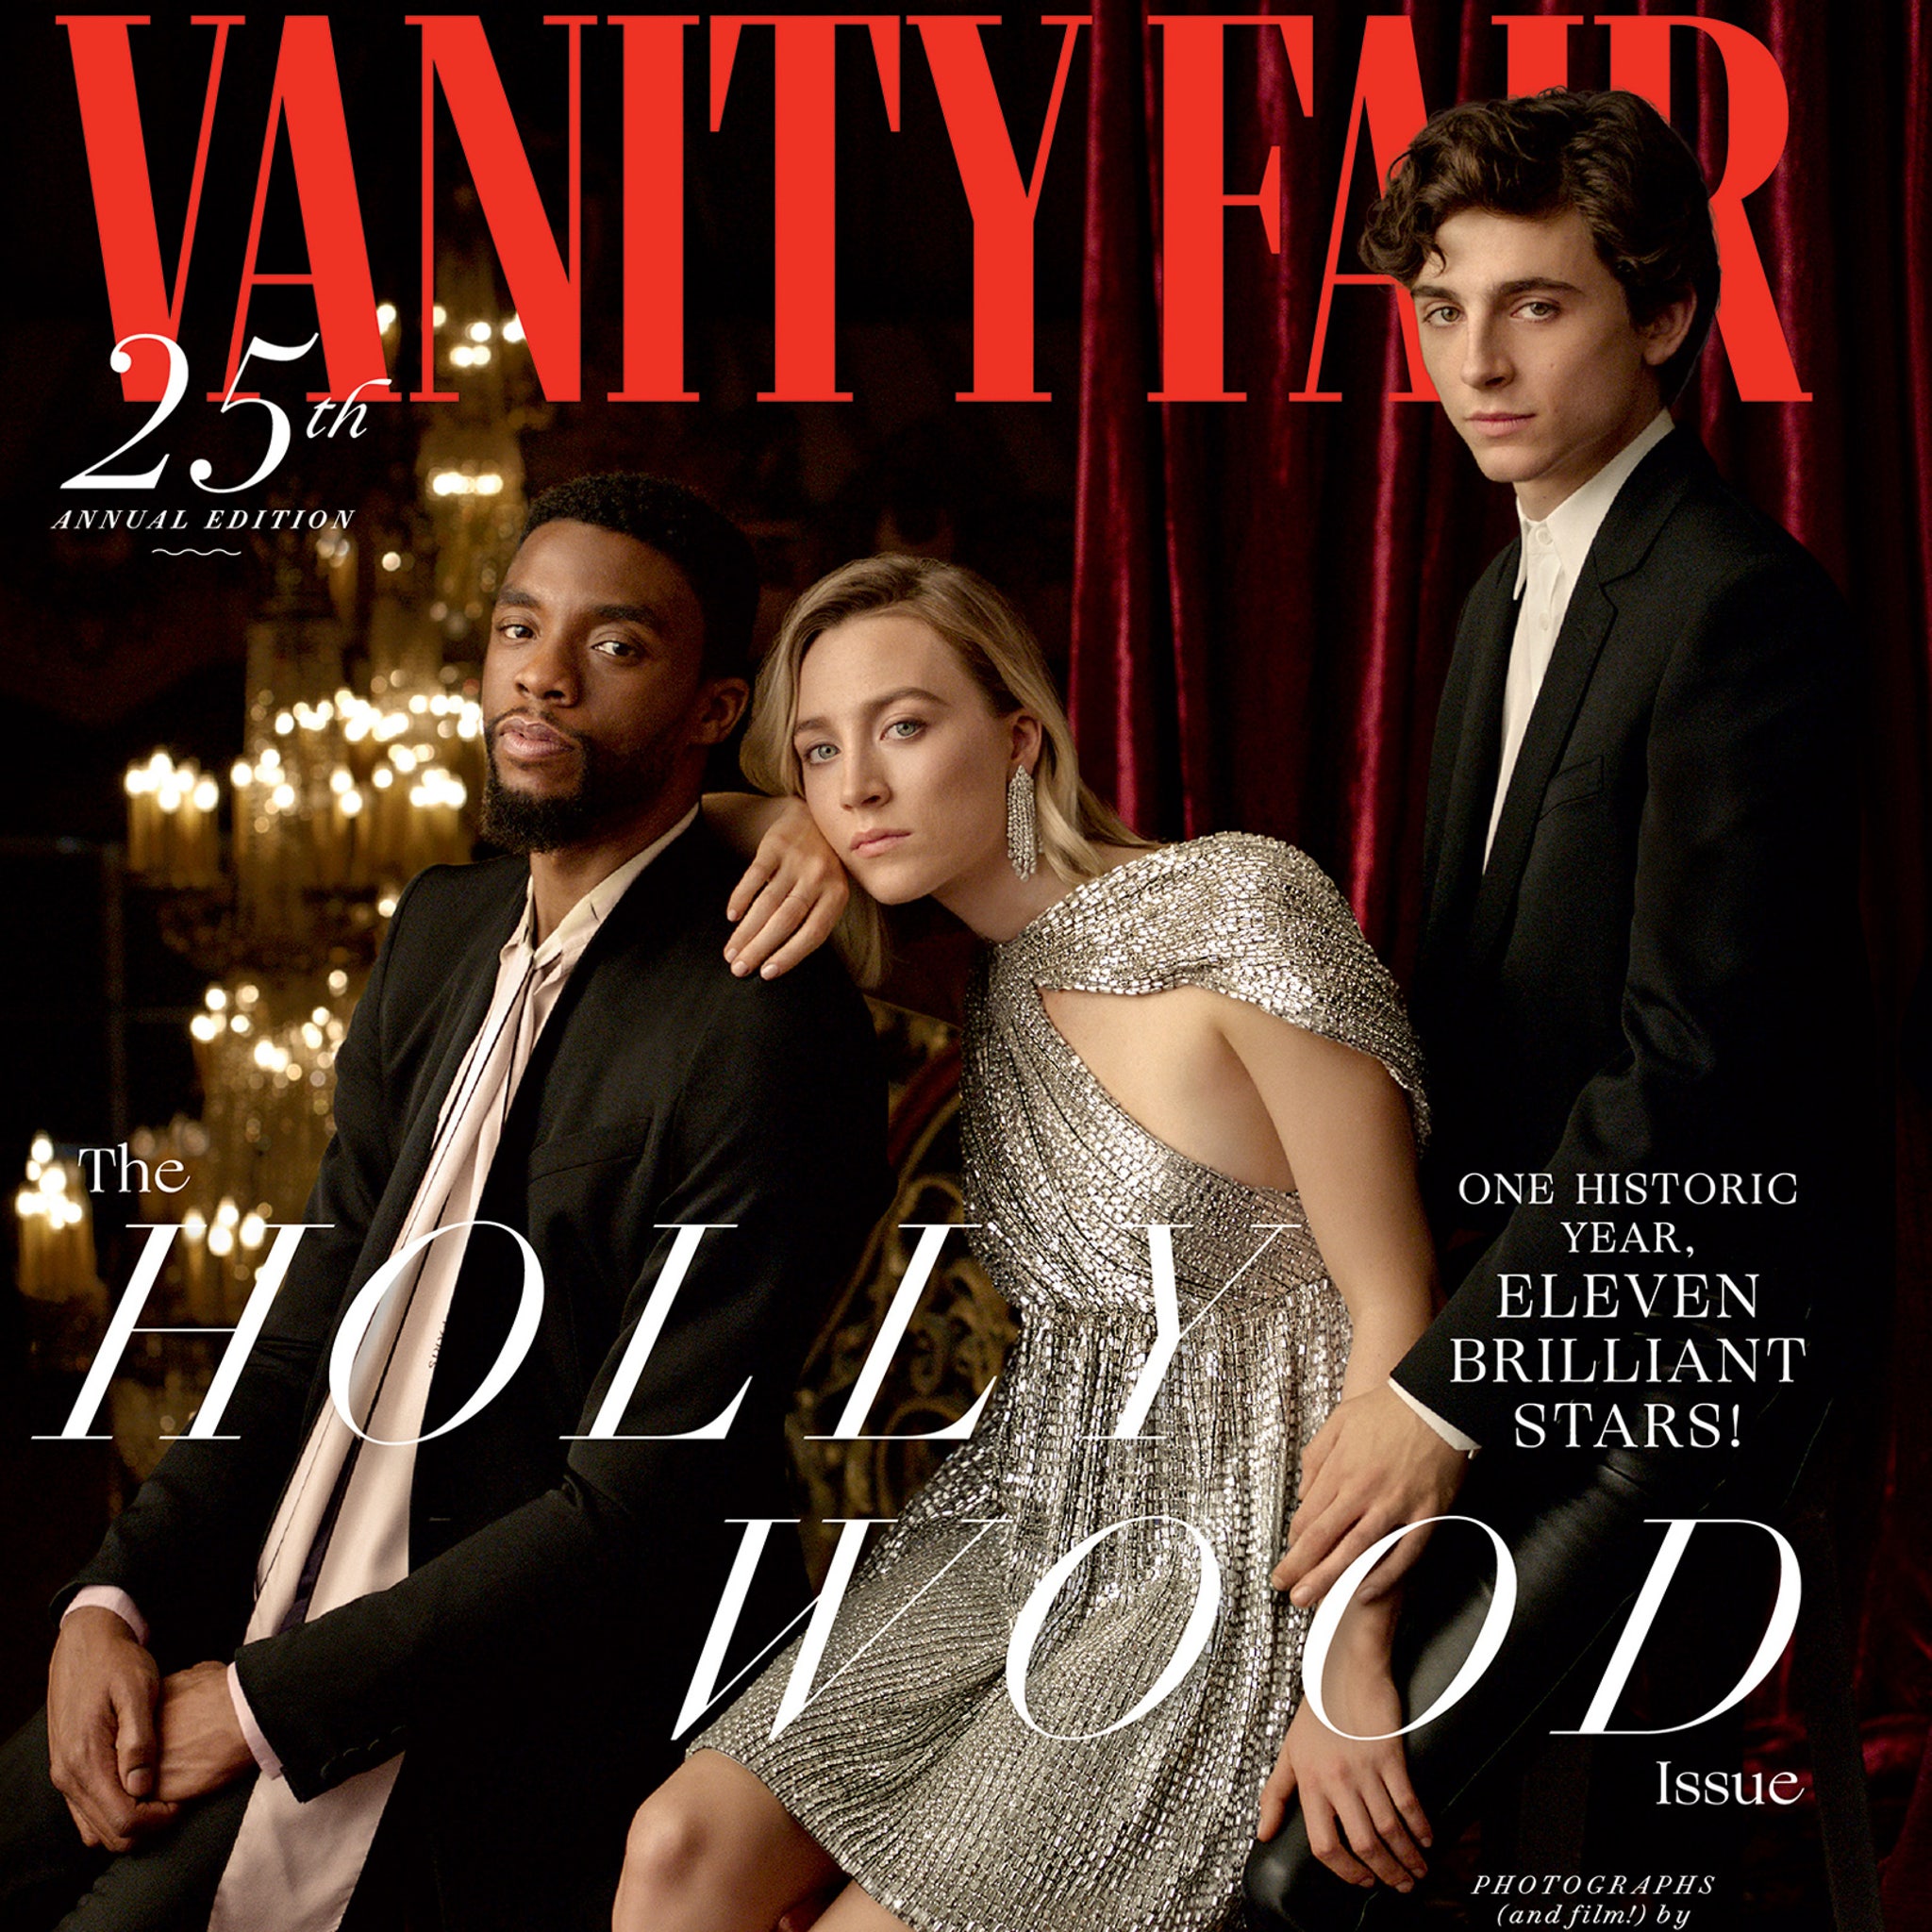 Vanity Fair praised for diverse cover